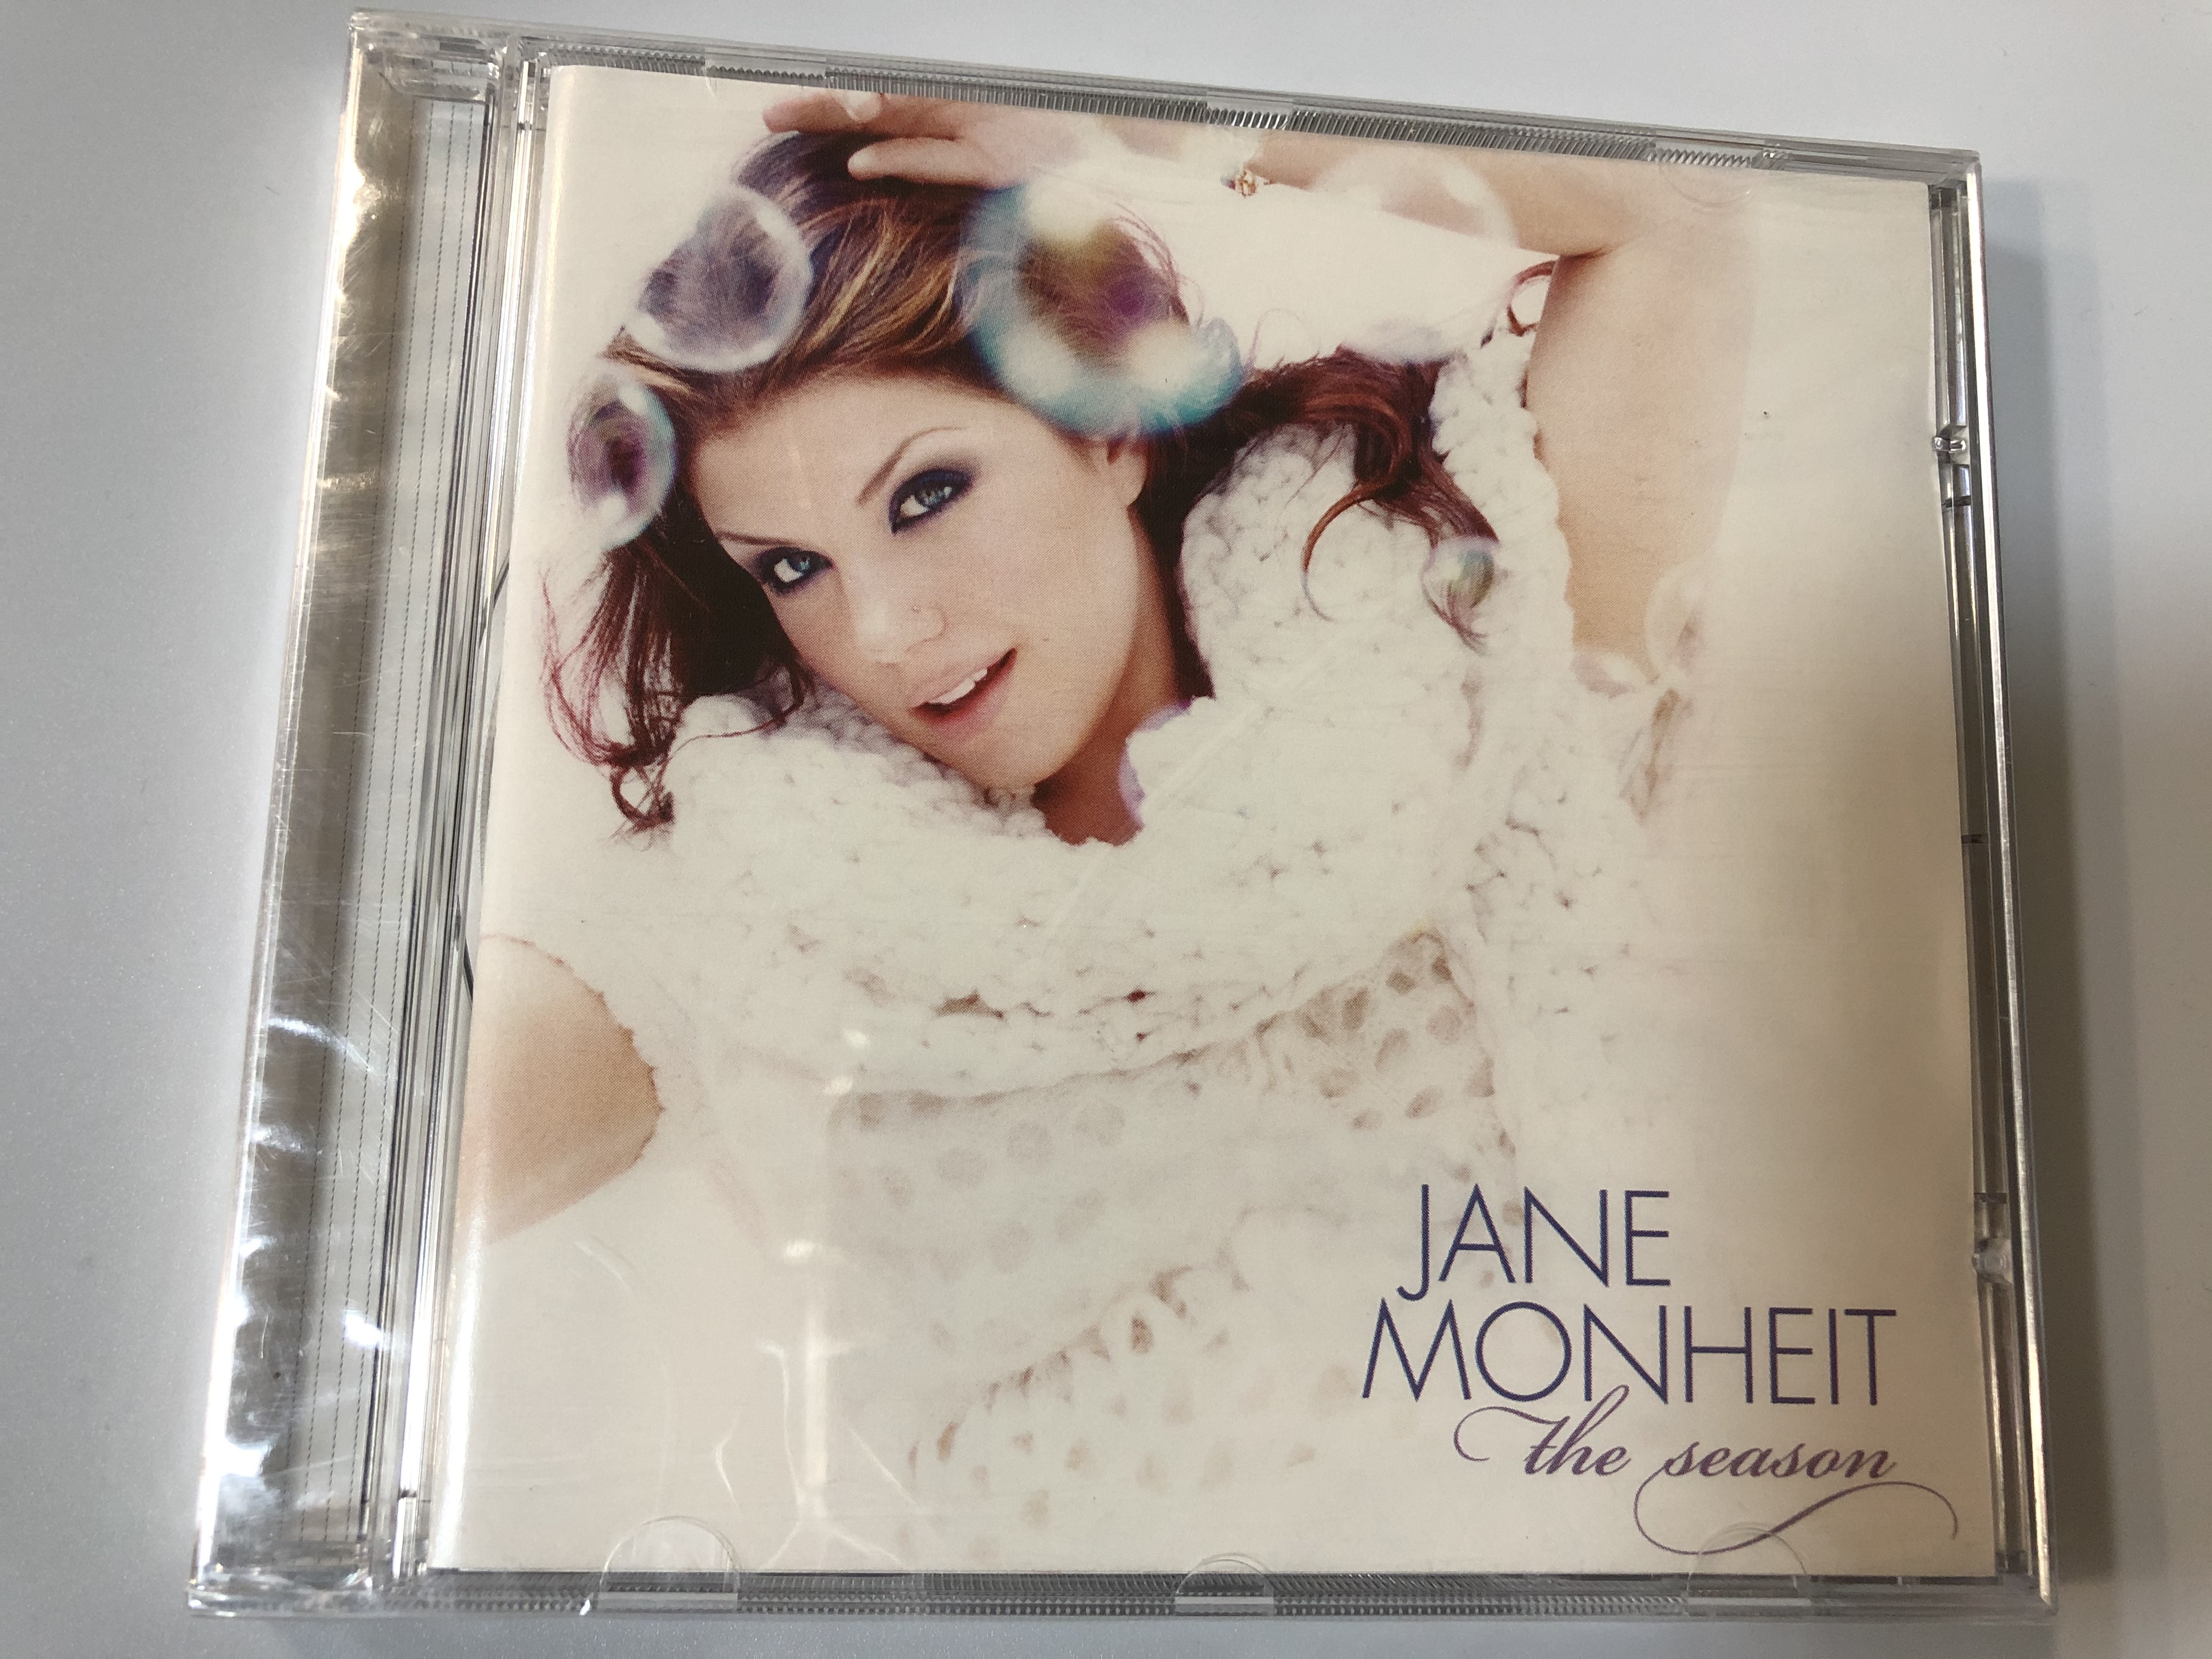 jane-monheit-the-season-sony-bmg-music-entertainment-audio-cd-2005-82876-74120-2-1-.jpg